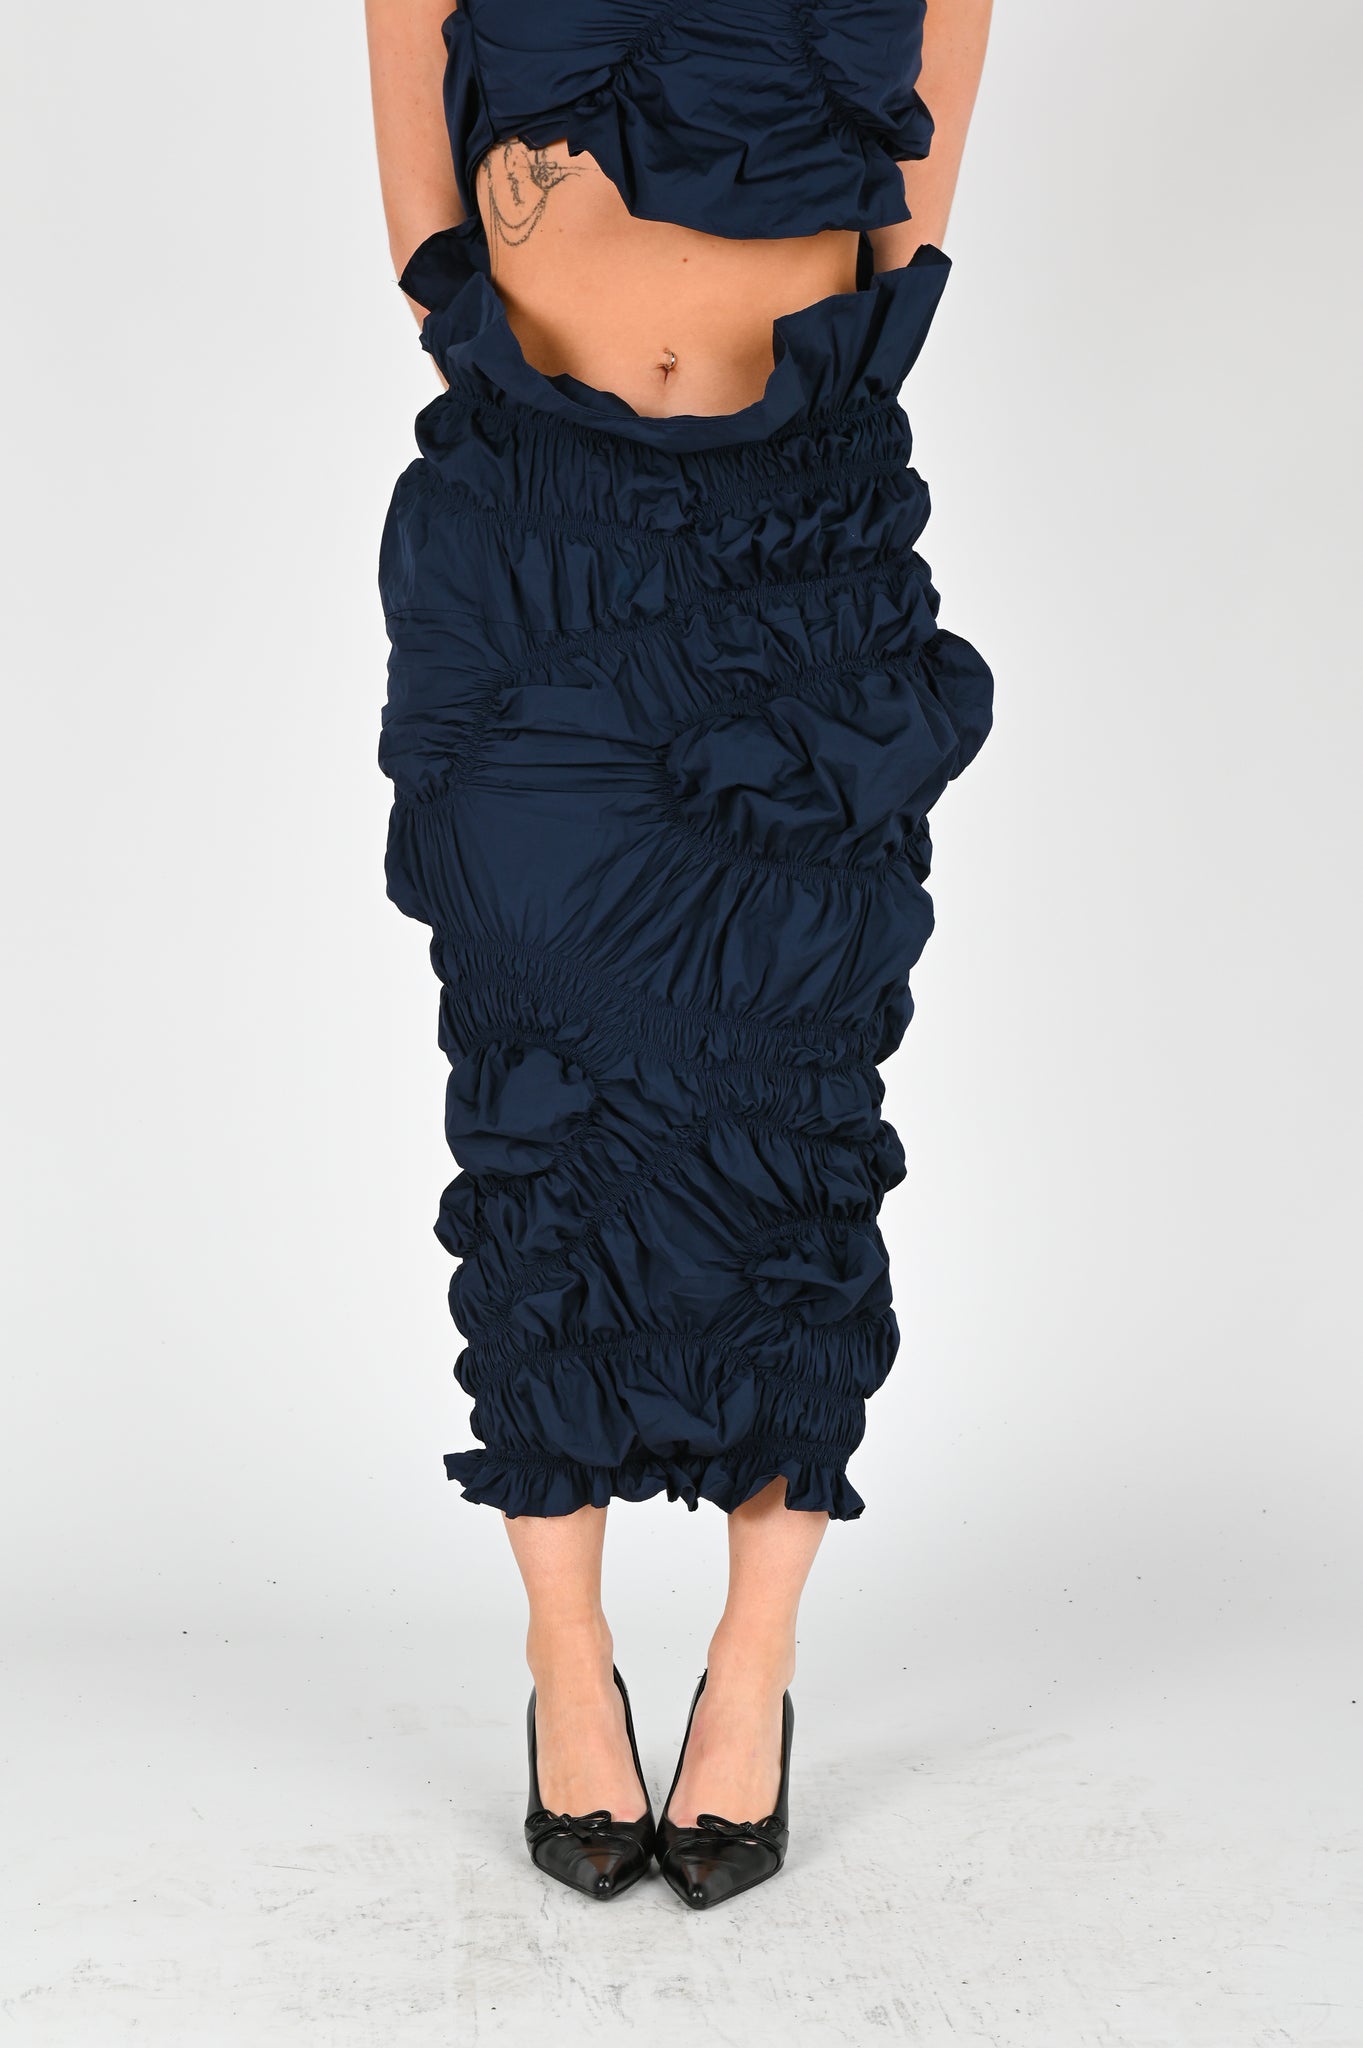 KATALYST 'Emergence' Modular Skirt/Dress